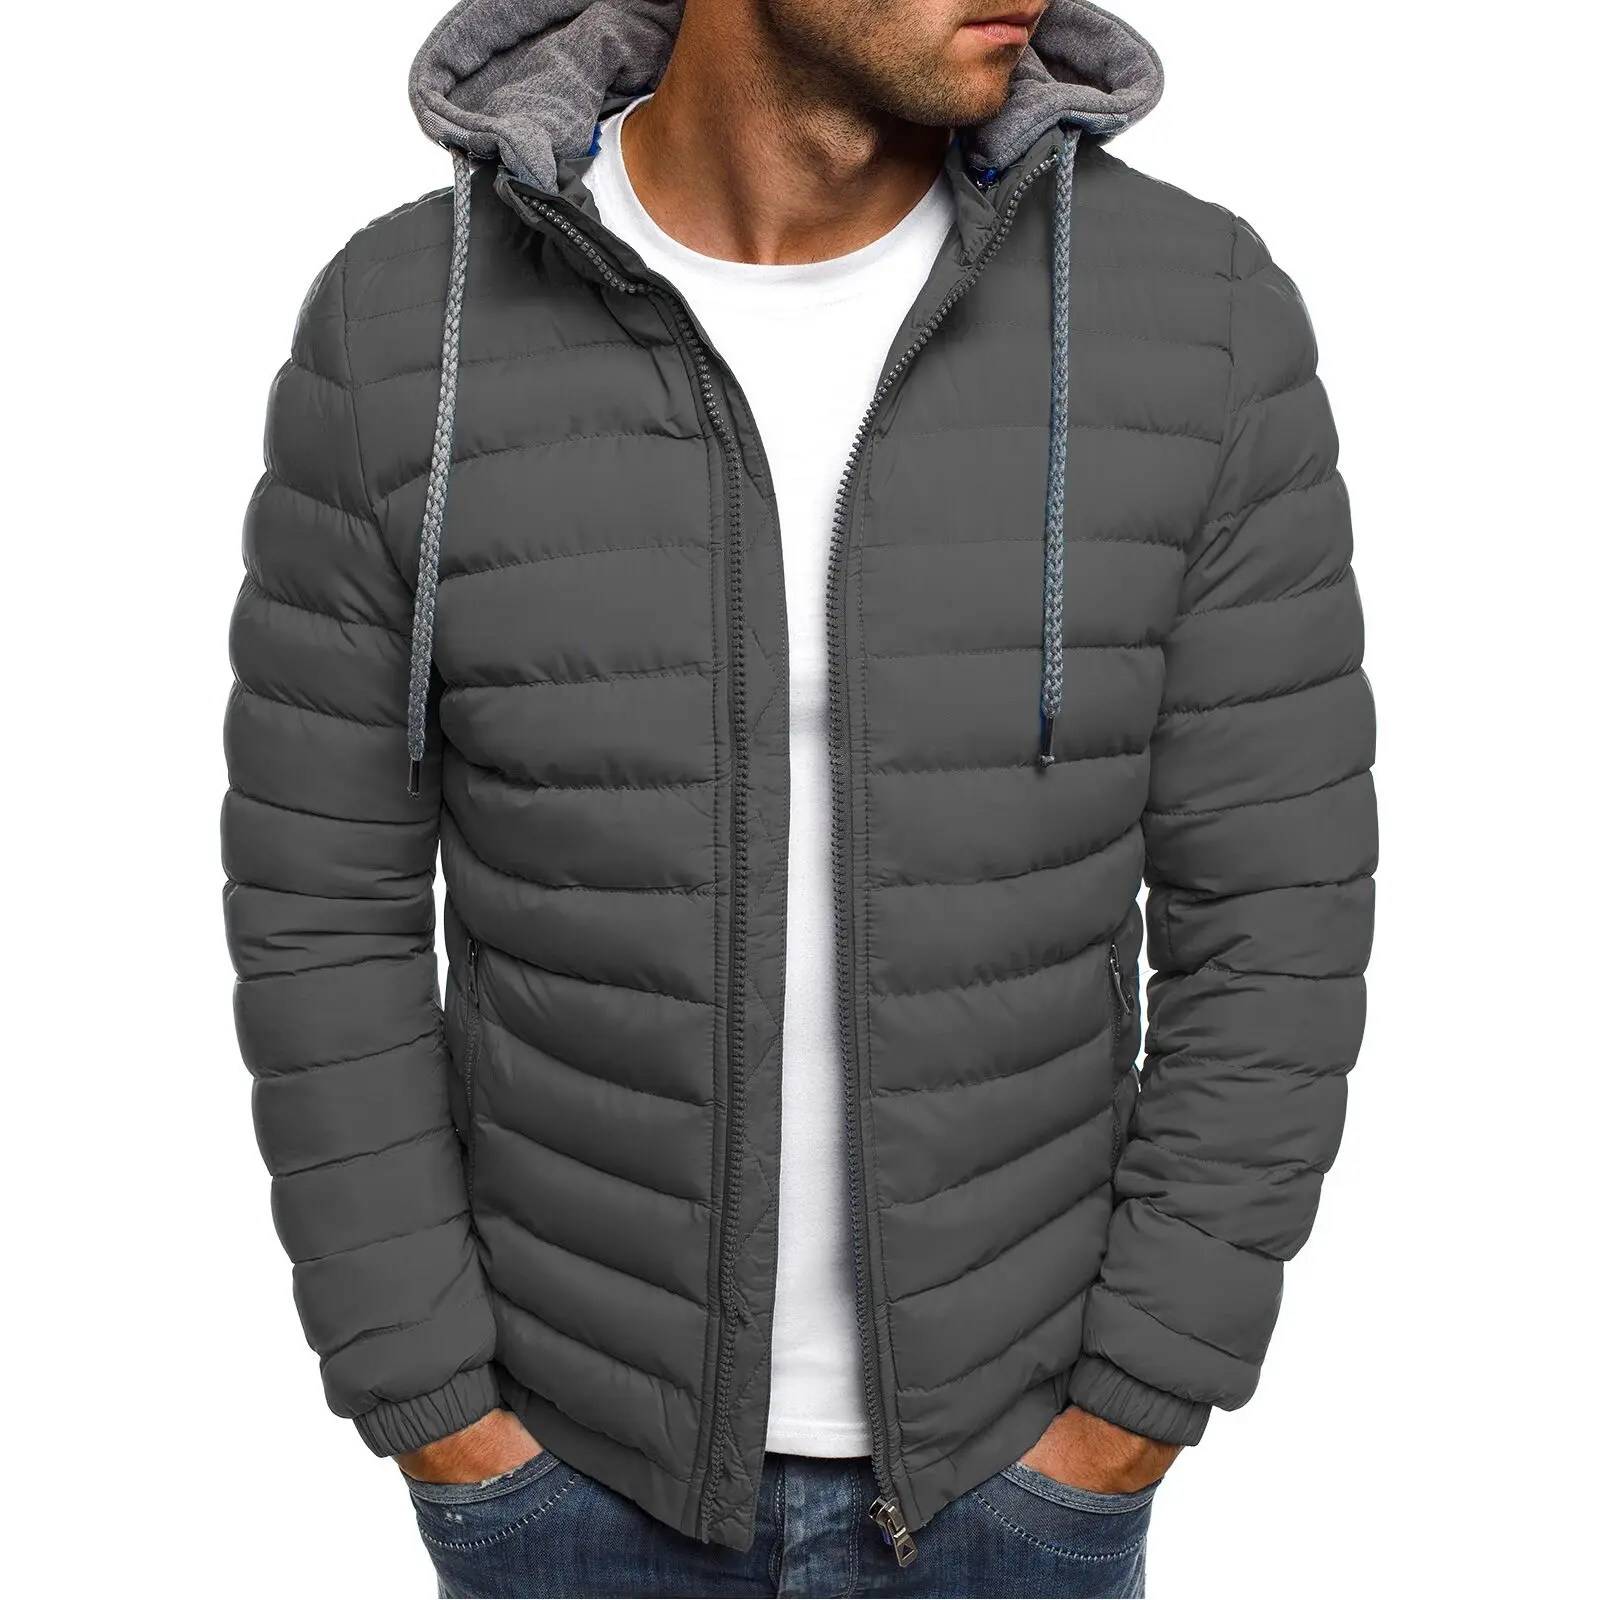 ZOGAA новые мужские парки пальто с капюшоном Мужская парка куртка мужская одежда пальто для мужчин хлопковая одежда зимнее пальто Мужская куртка - Цвет: Серый